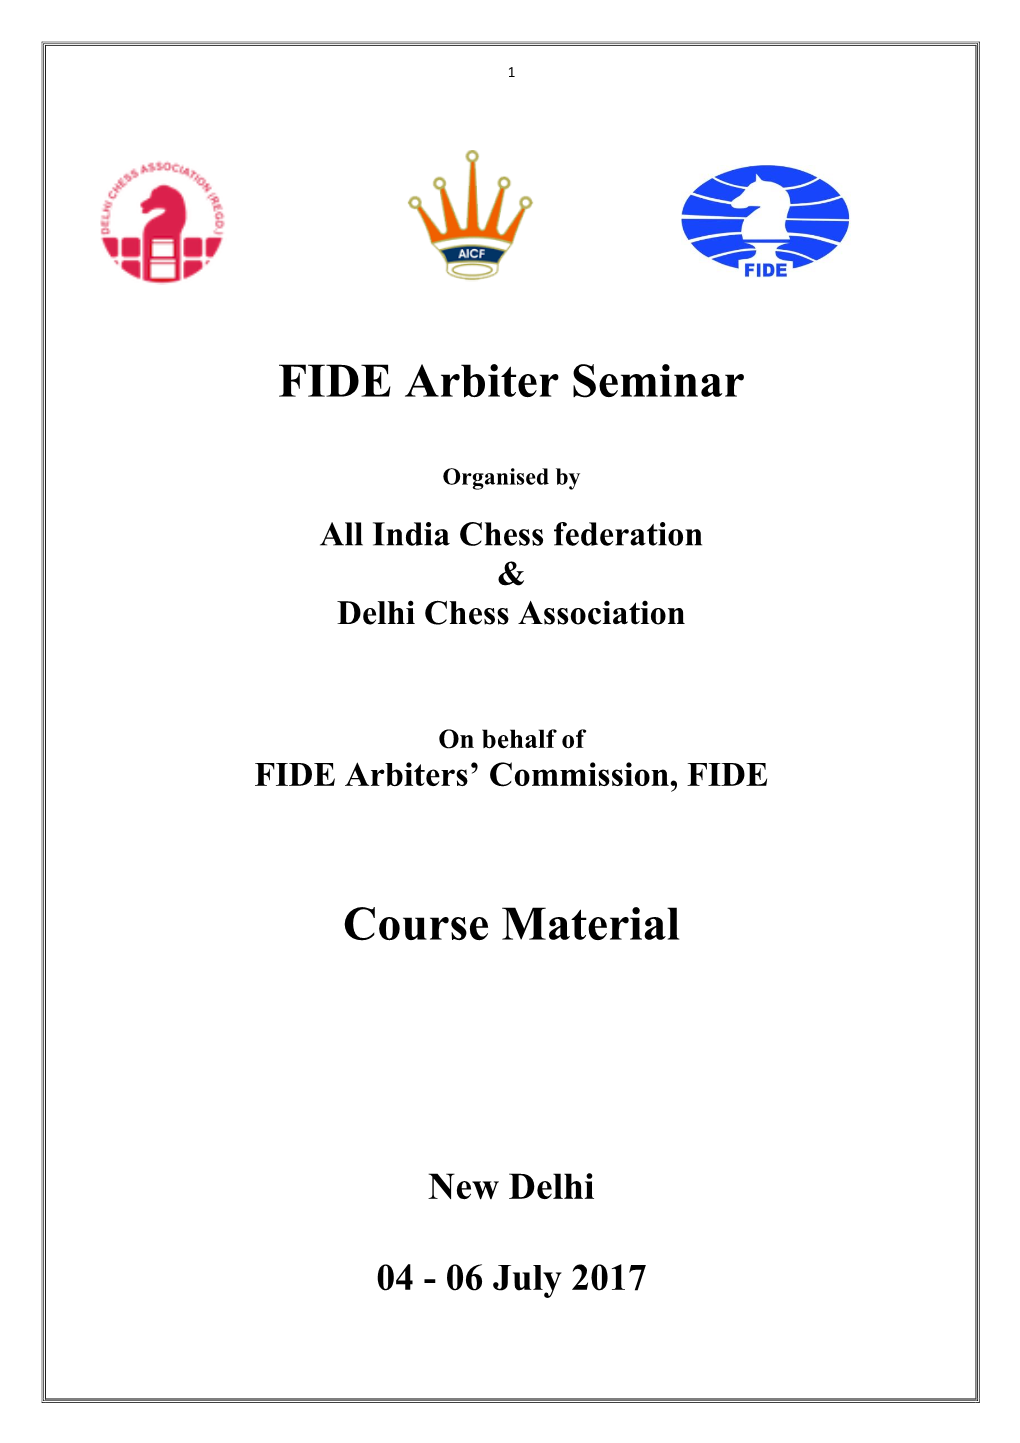 FIDE Arbiter Seminar Course Material